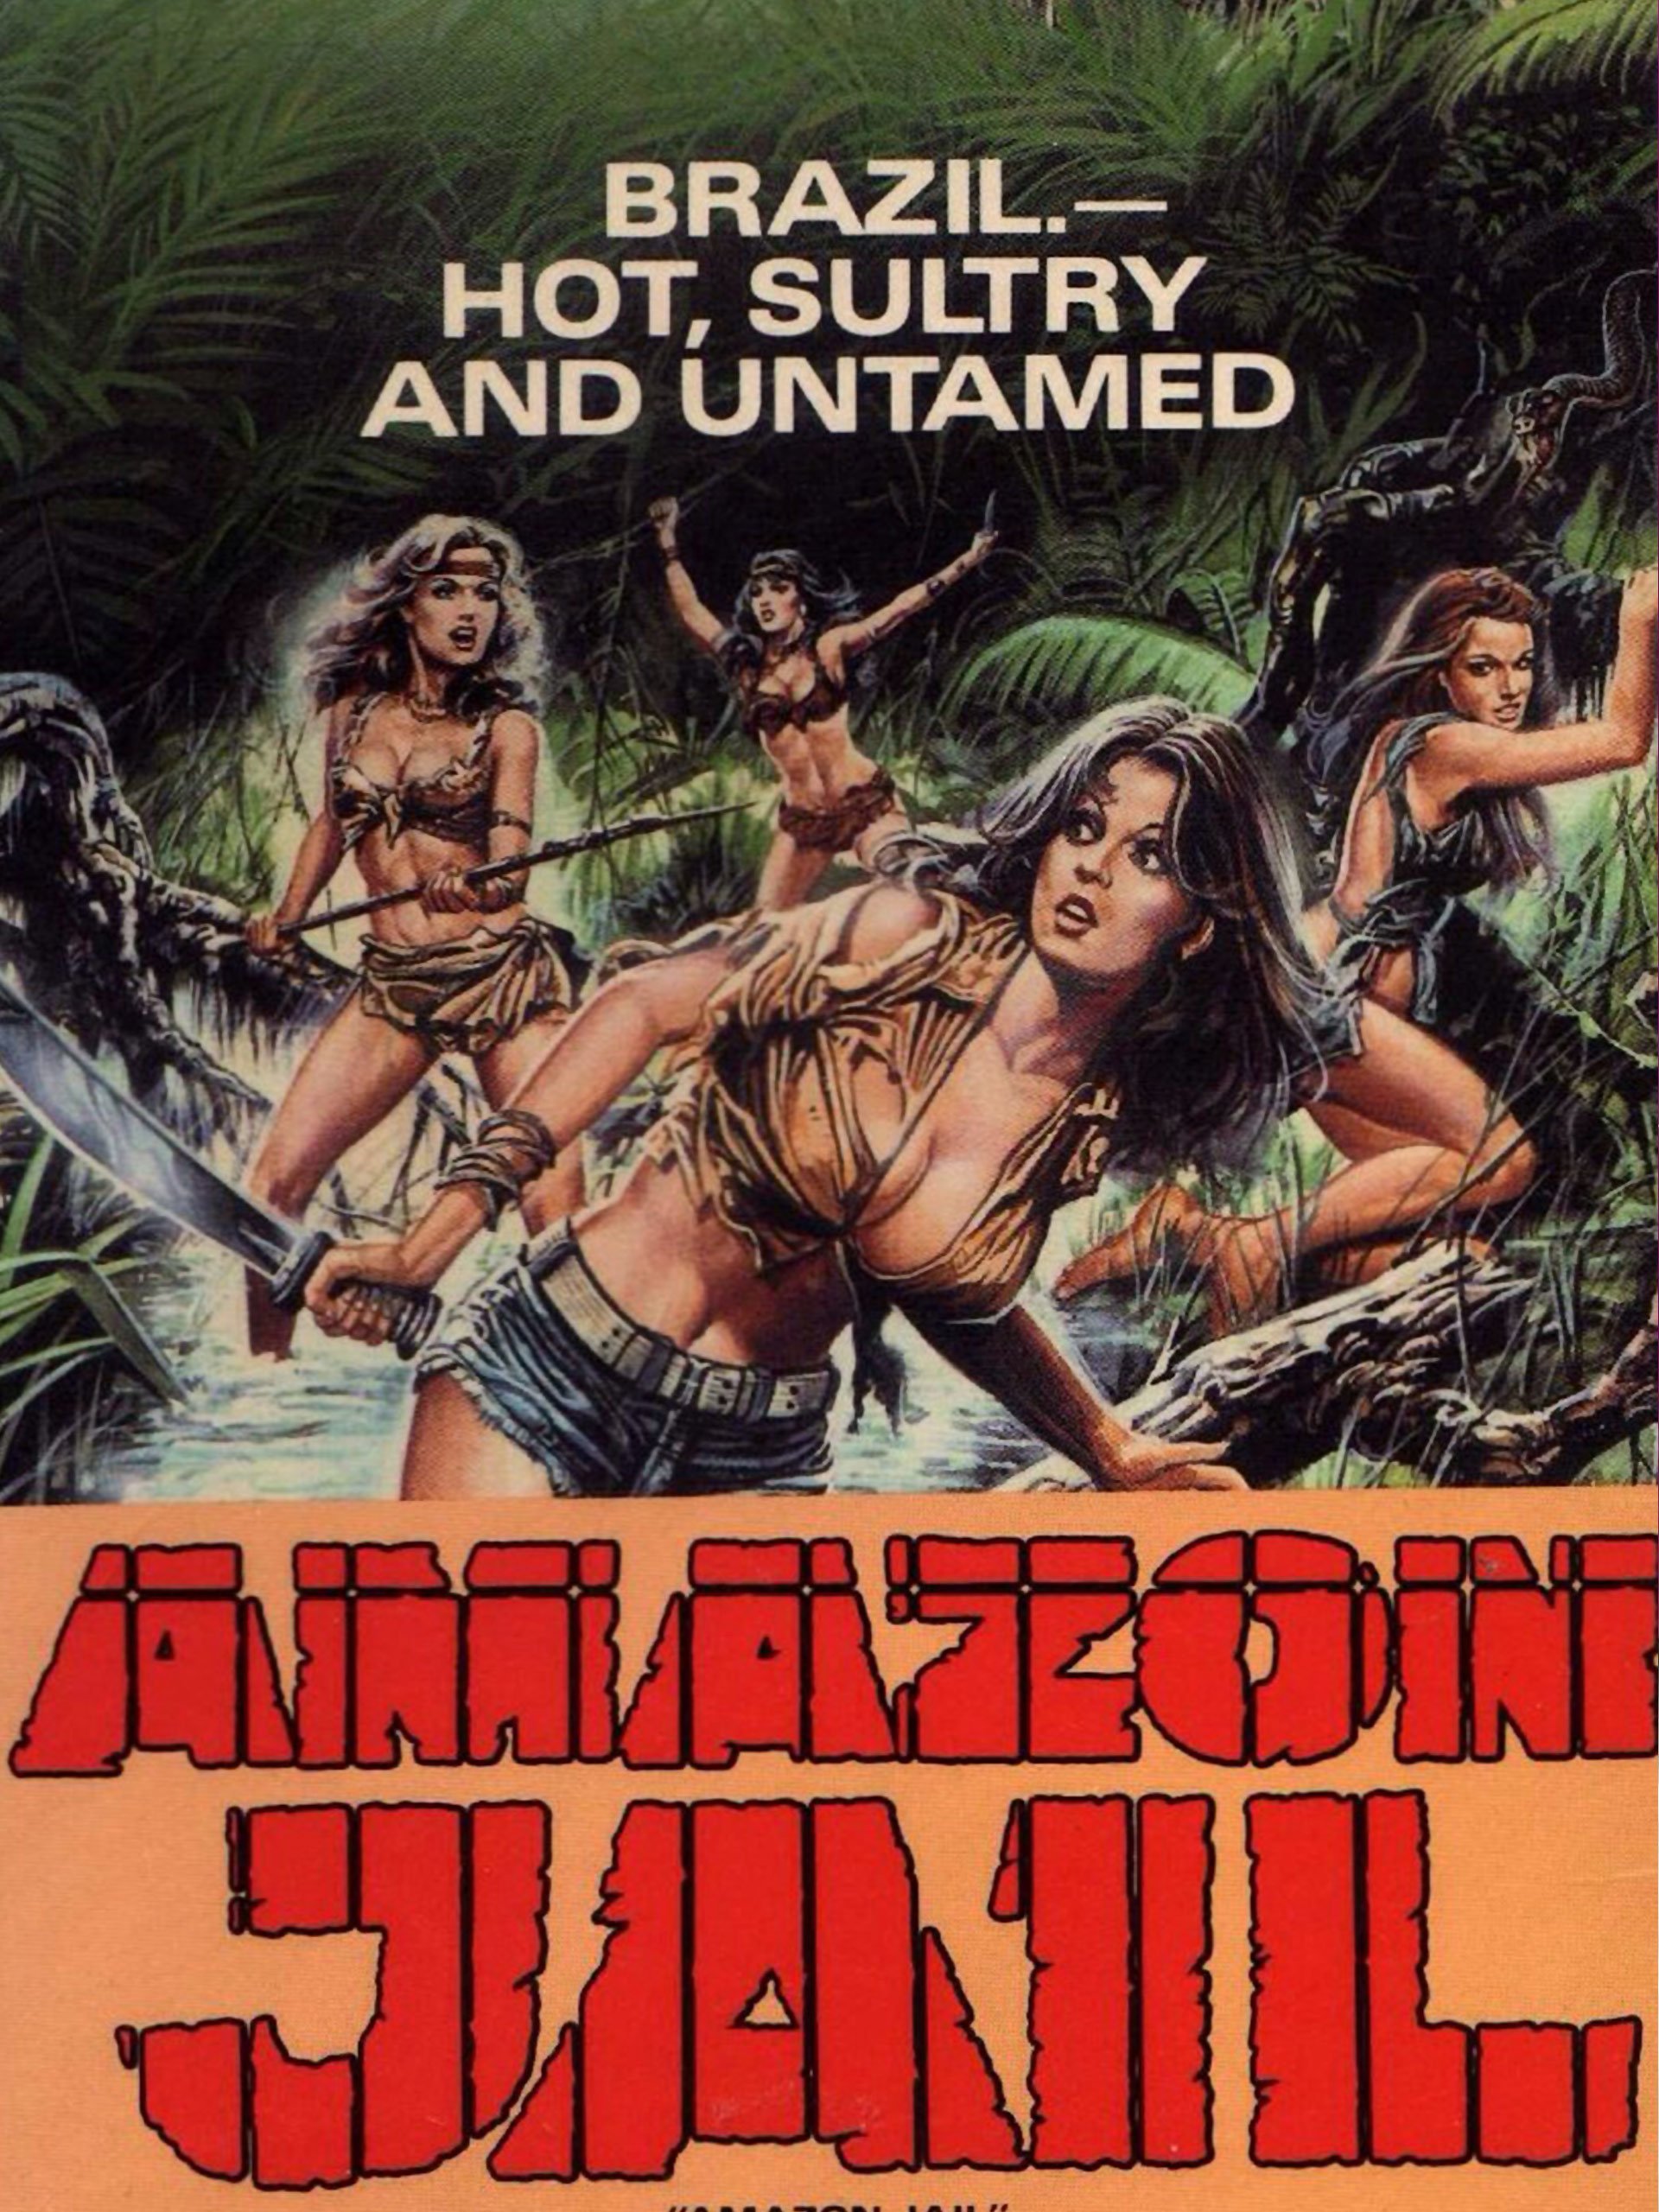 Amazon Jail (1982) - Original Poster - vintagepornfun.com